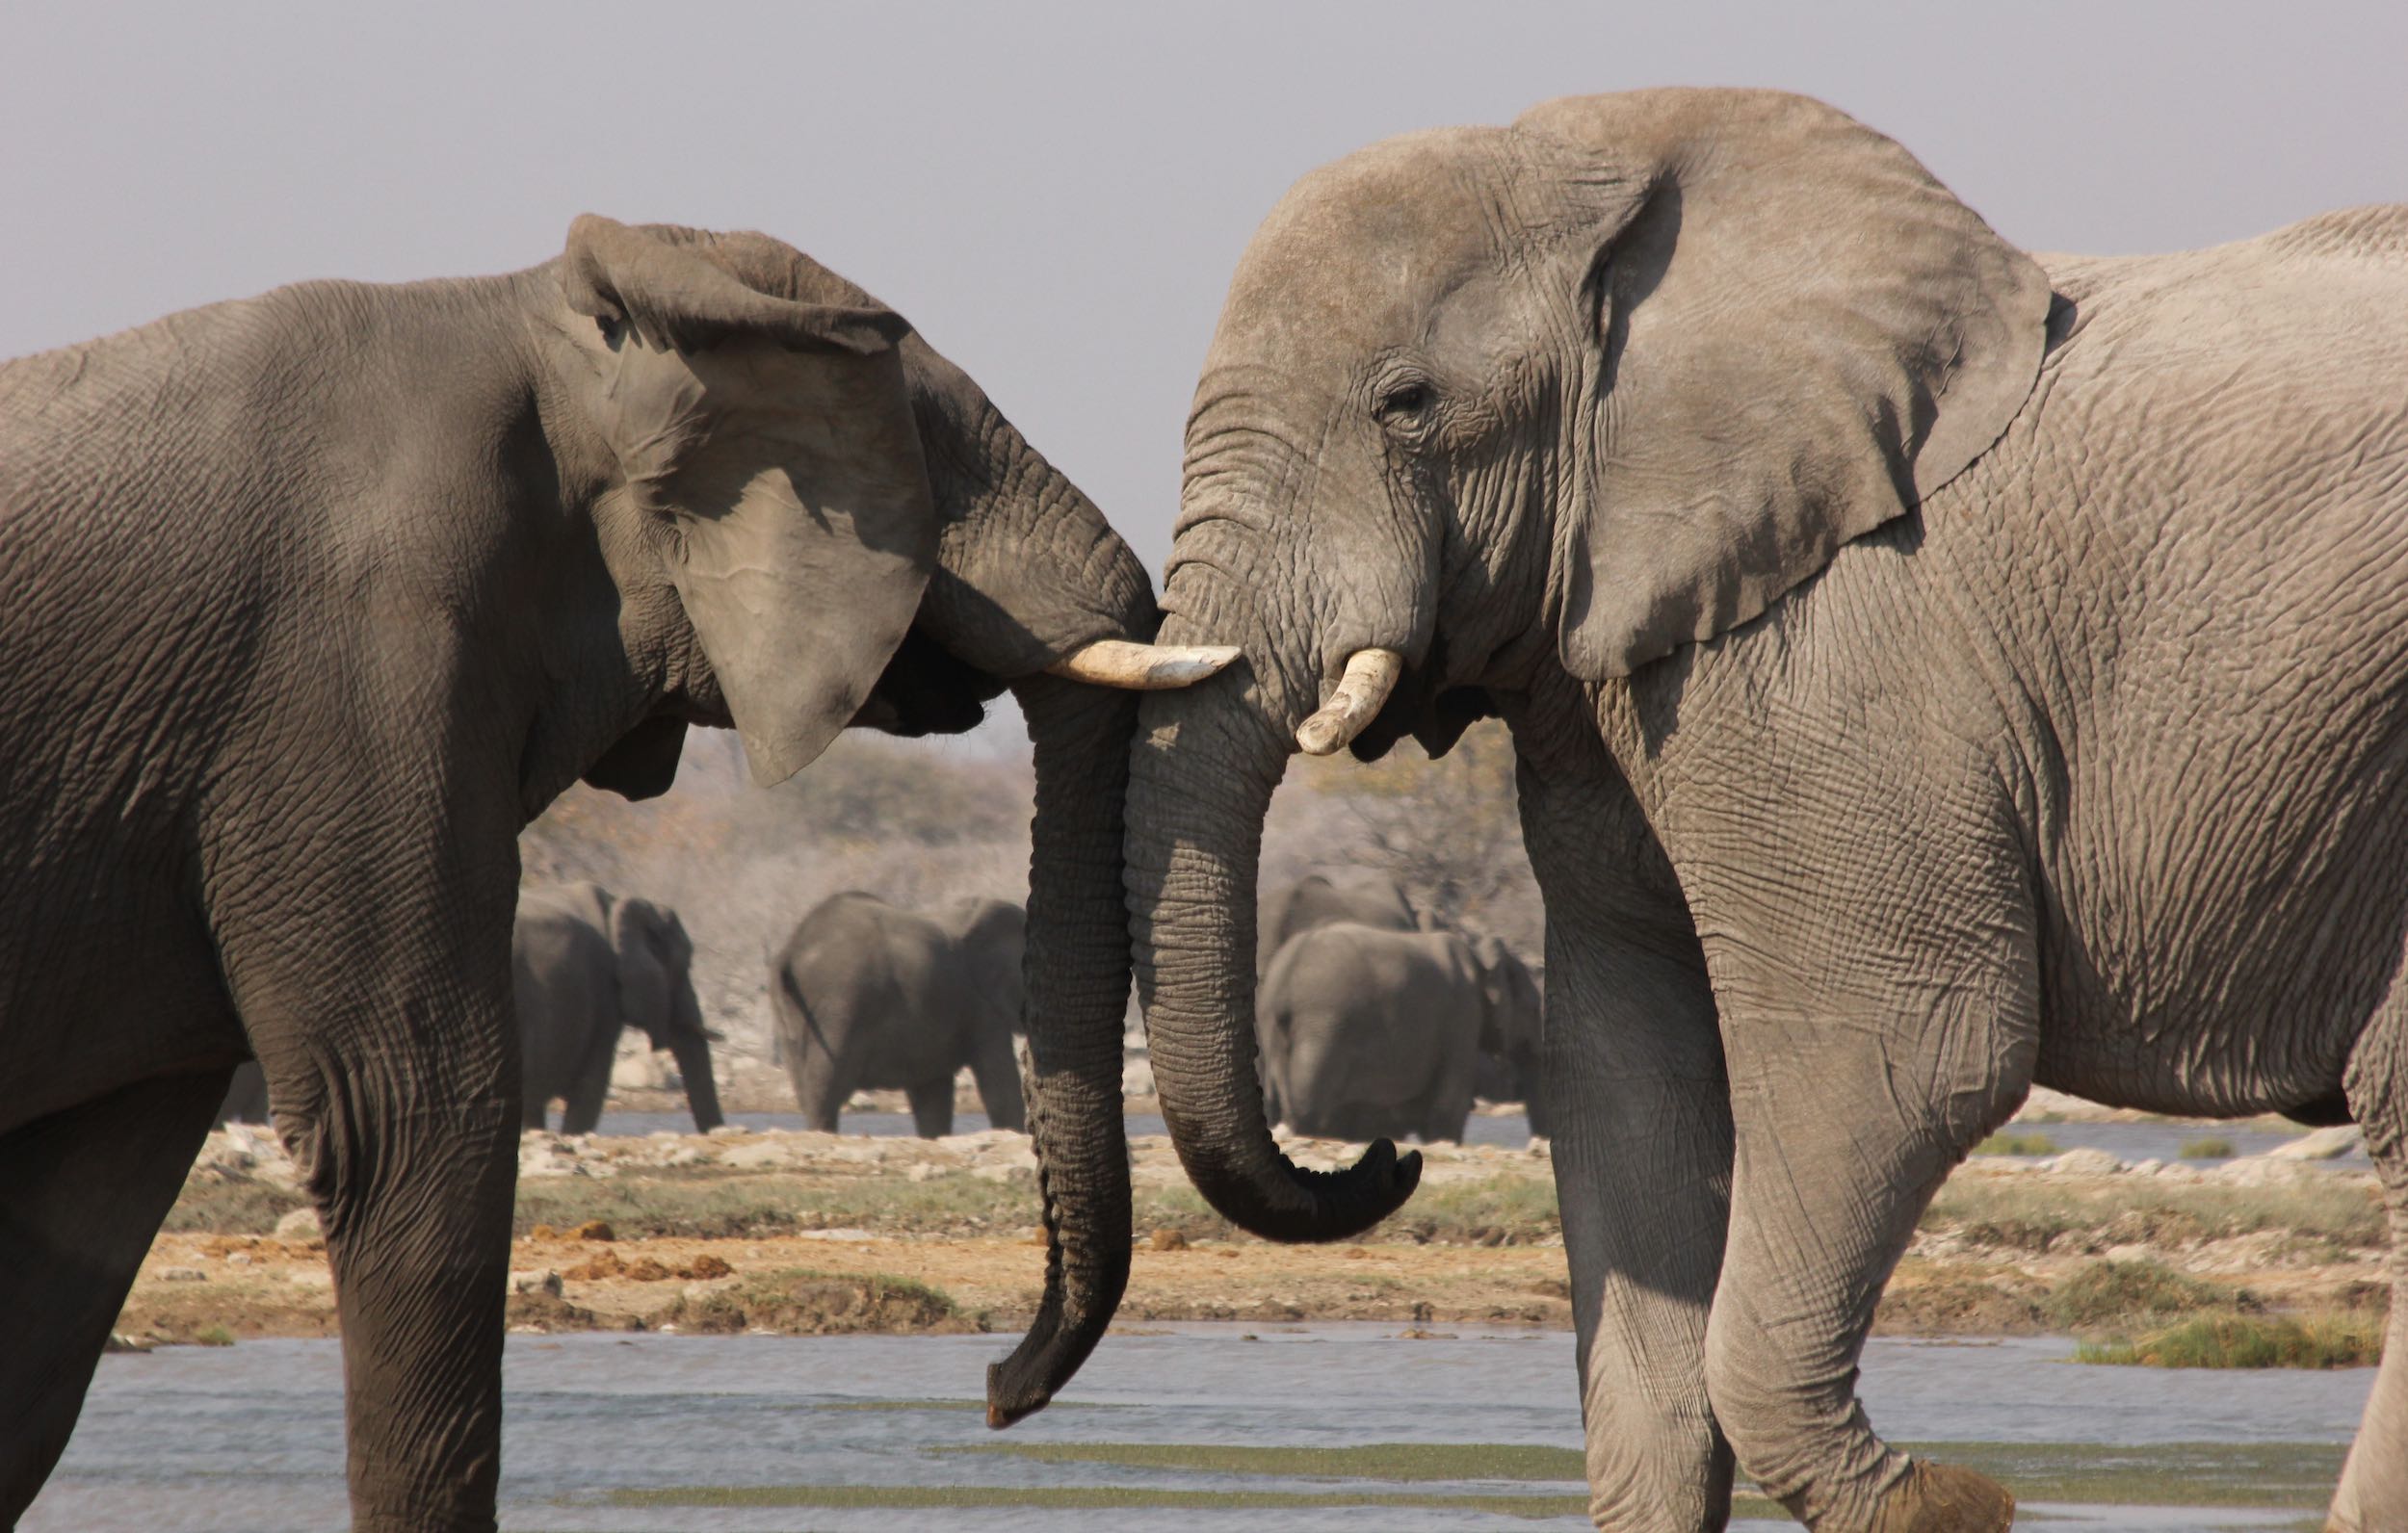 Elephants sparring